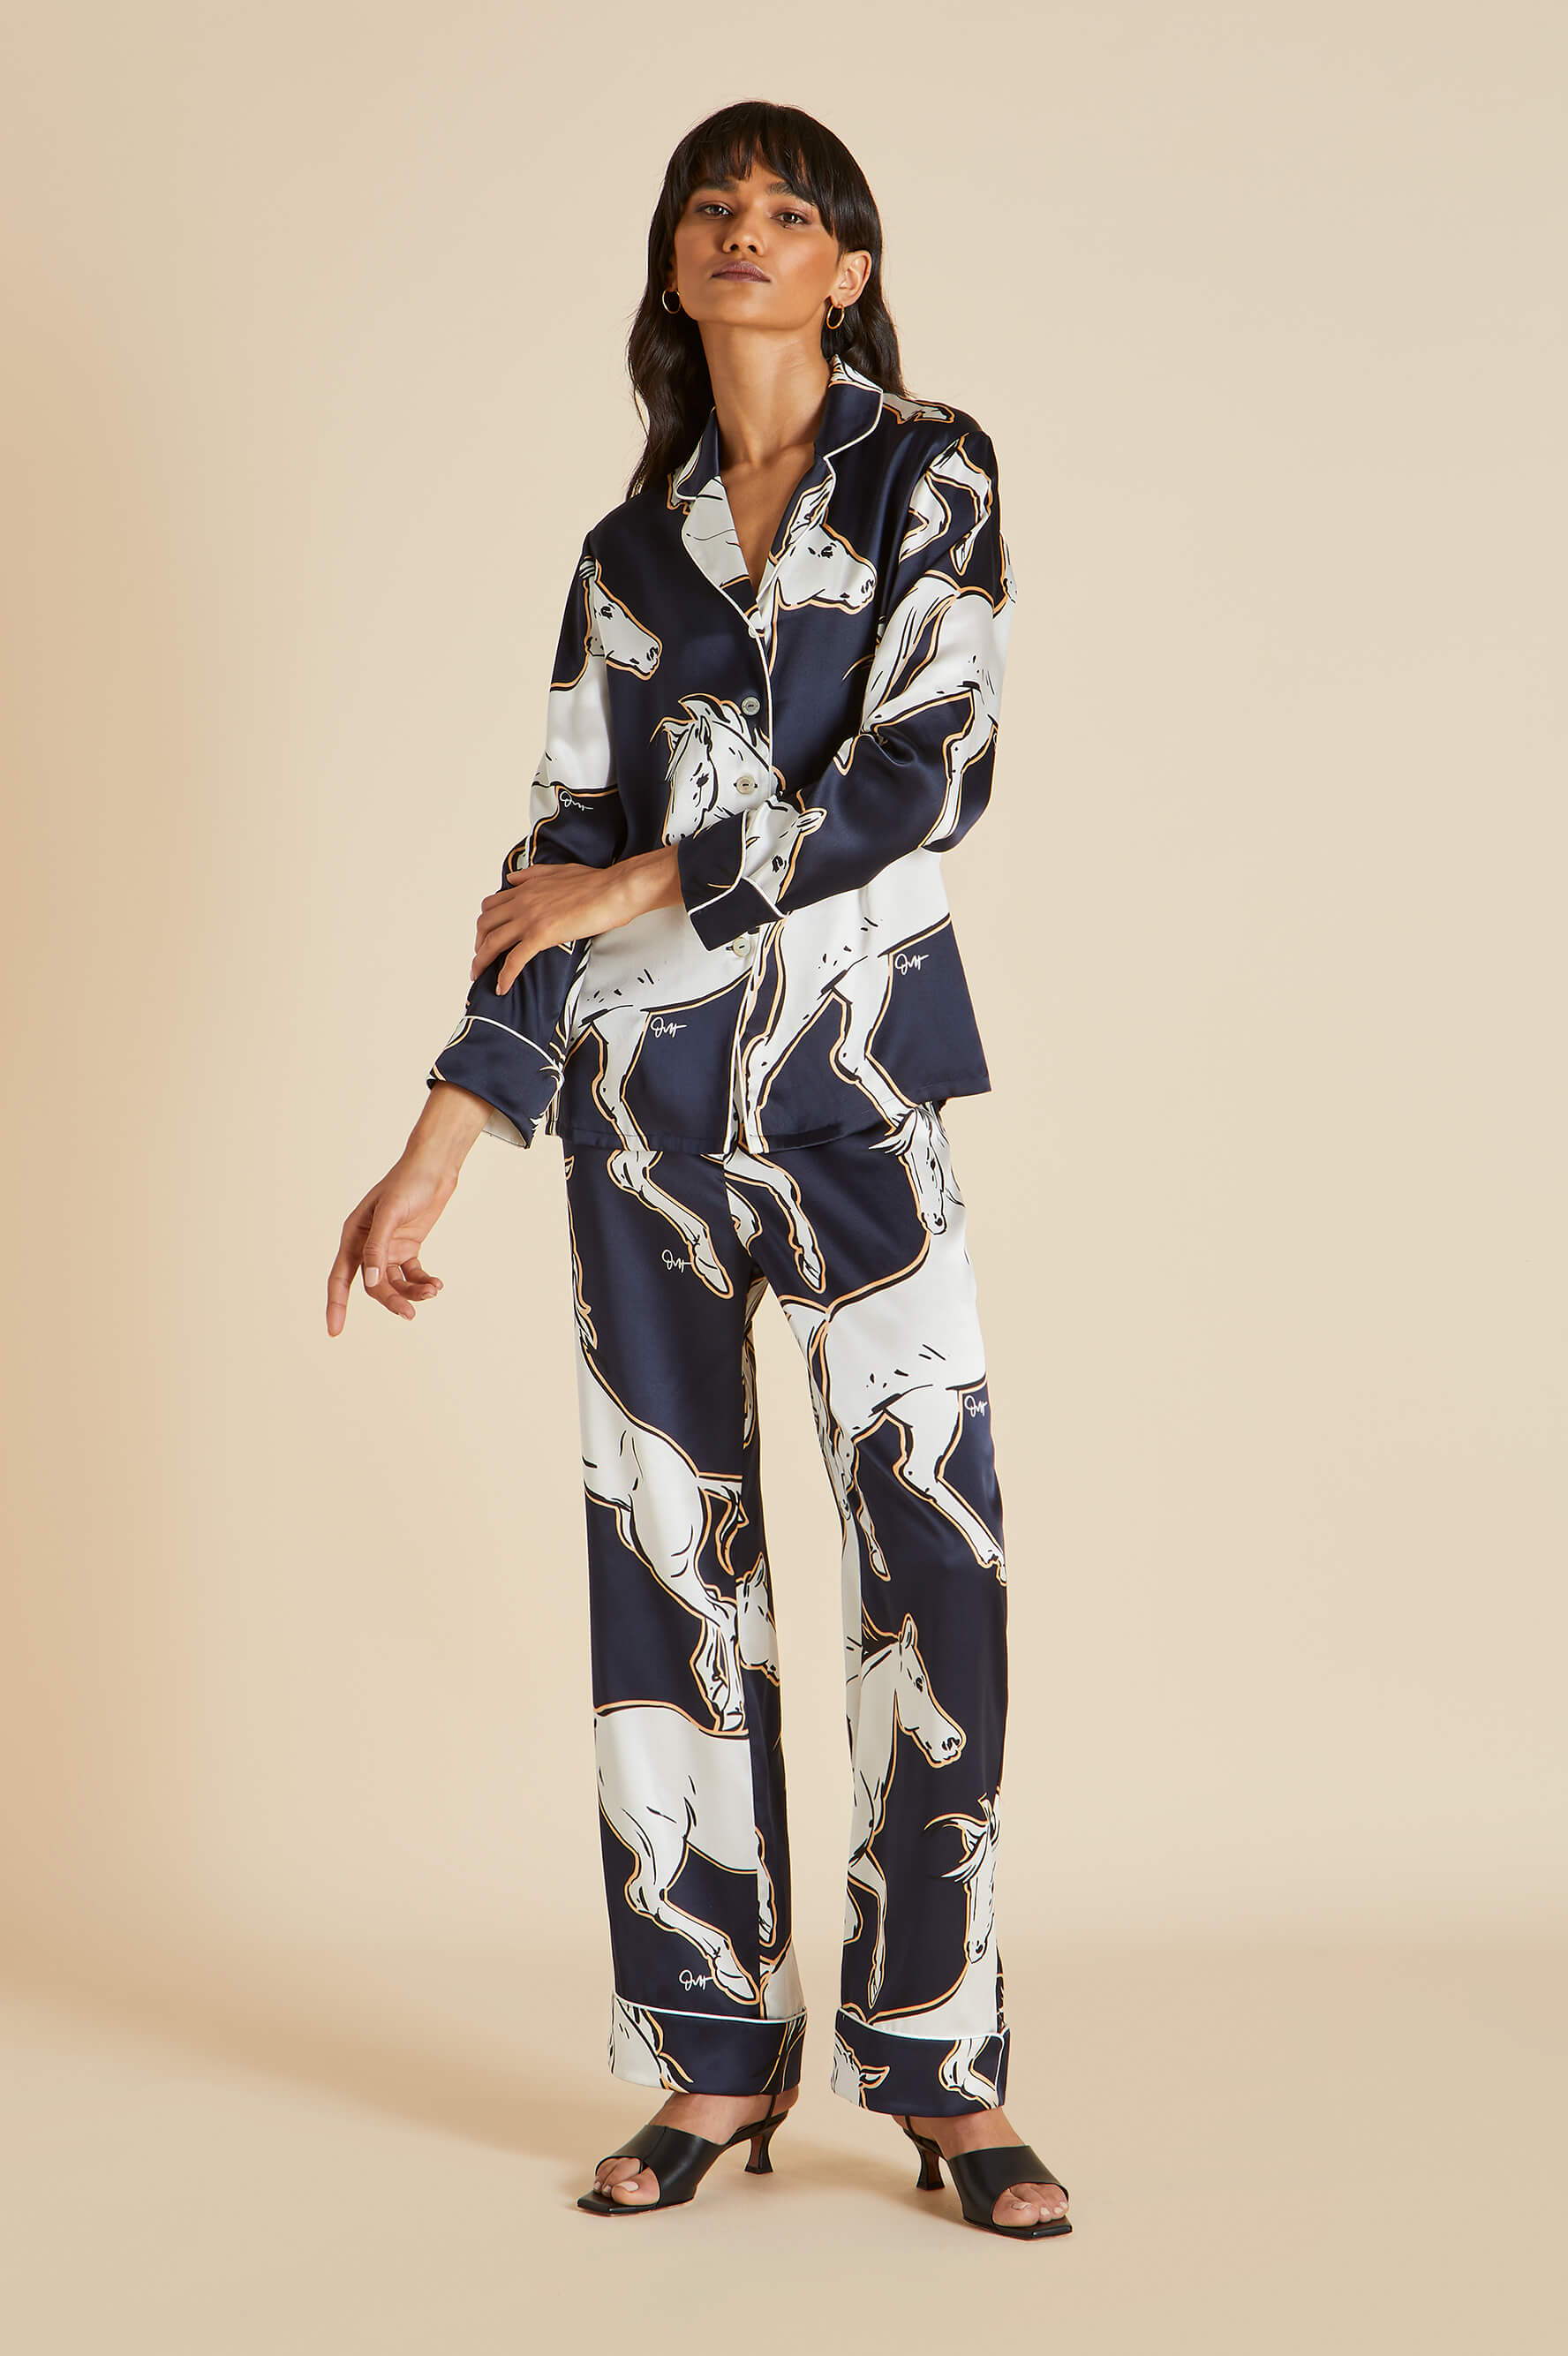 Imaara Period Chic - Luxury pyjamas and loungewear